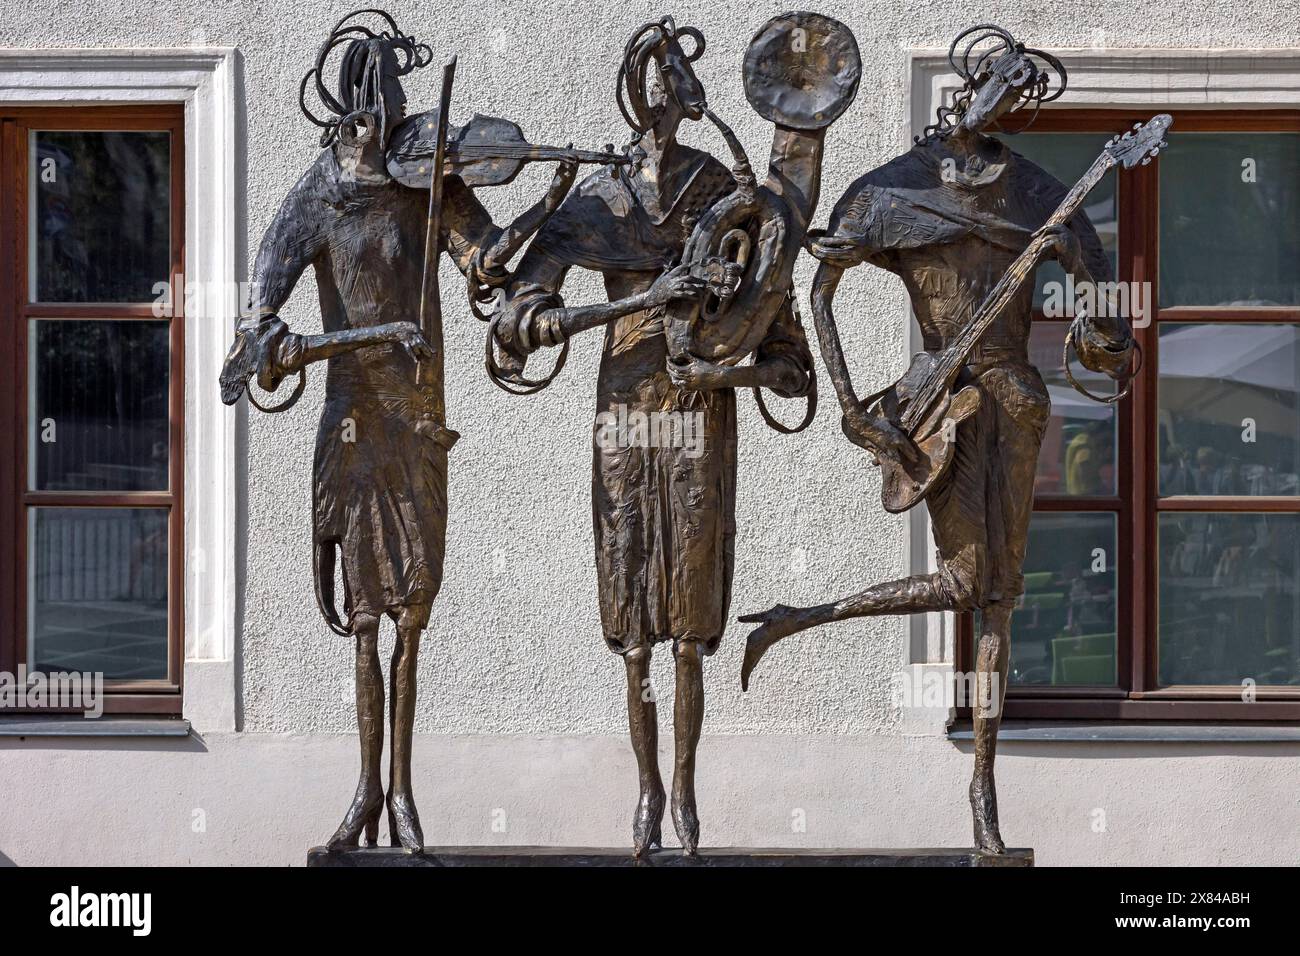 Sculpture of musicians by Joseph Michael Neustifter, in front of the city theatre, Bismarckplatz, Regensburg, Upper Palatinate, Bavaria, Germany Stock Photo